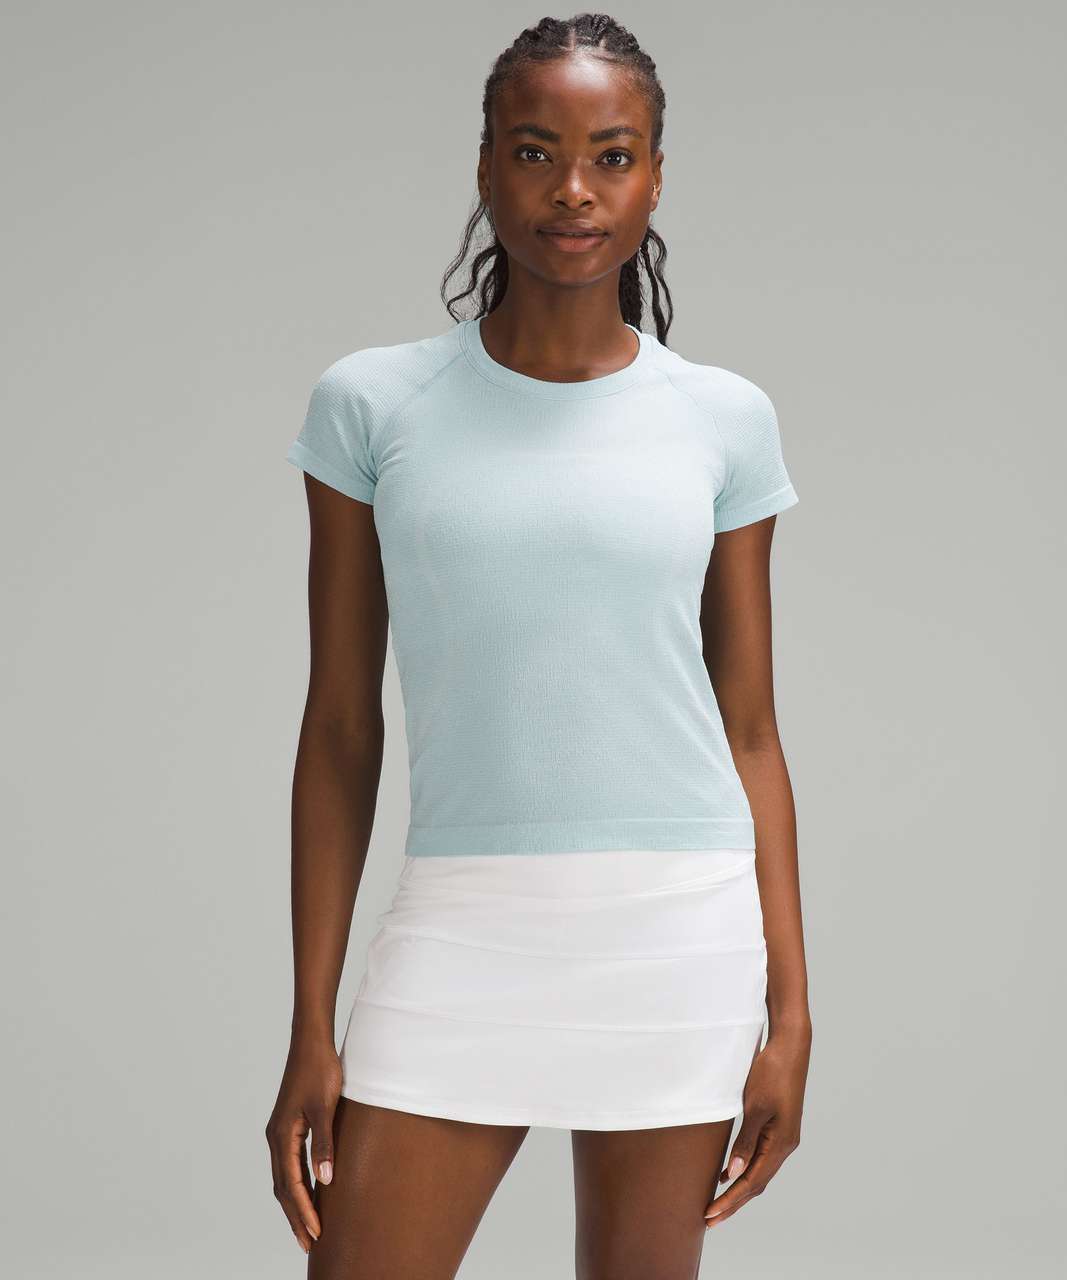 Lululemon Swiftly Tech Short-Sleeve Shirt 2.0 *Race Length - Parallel Texture Sheer Blue / Water